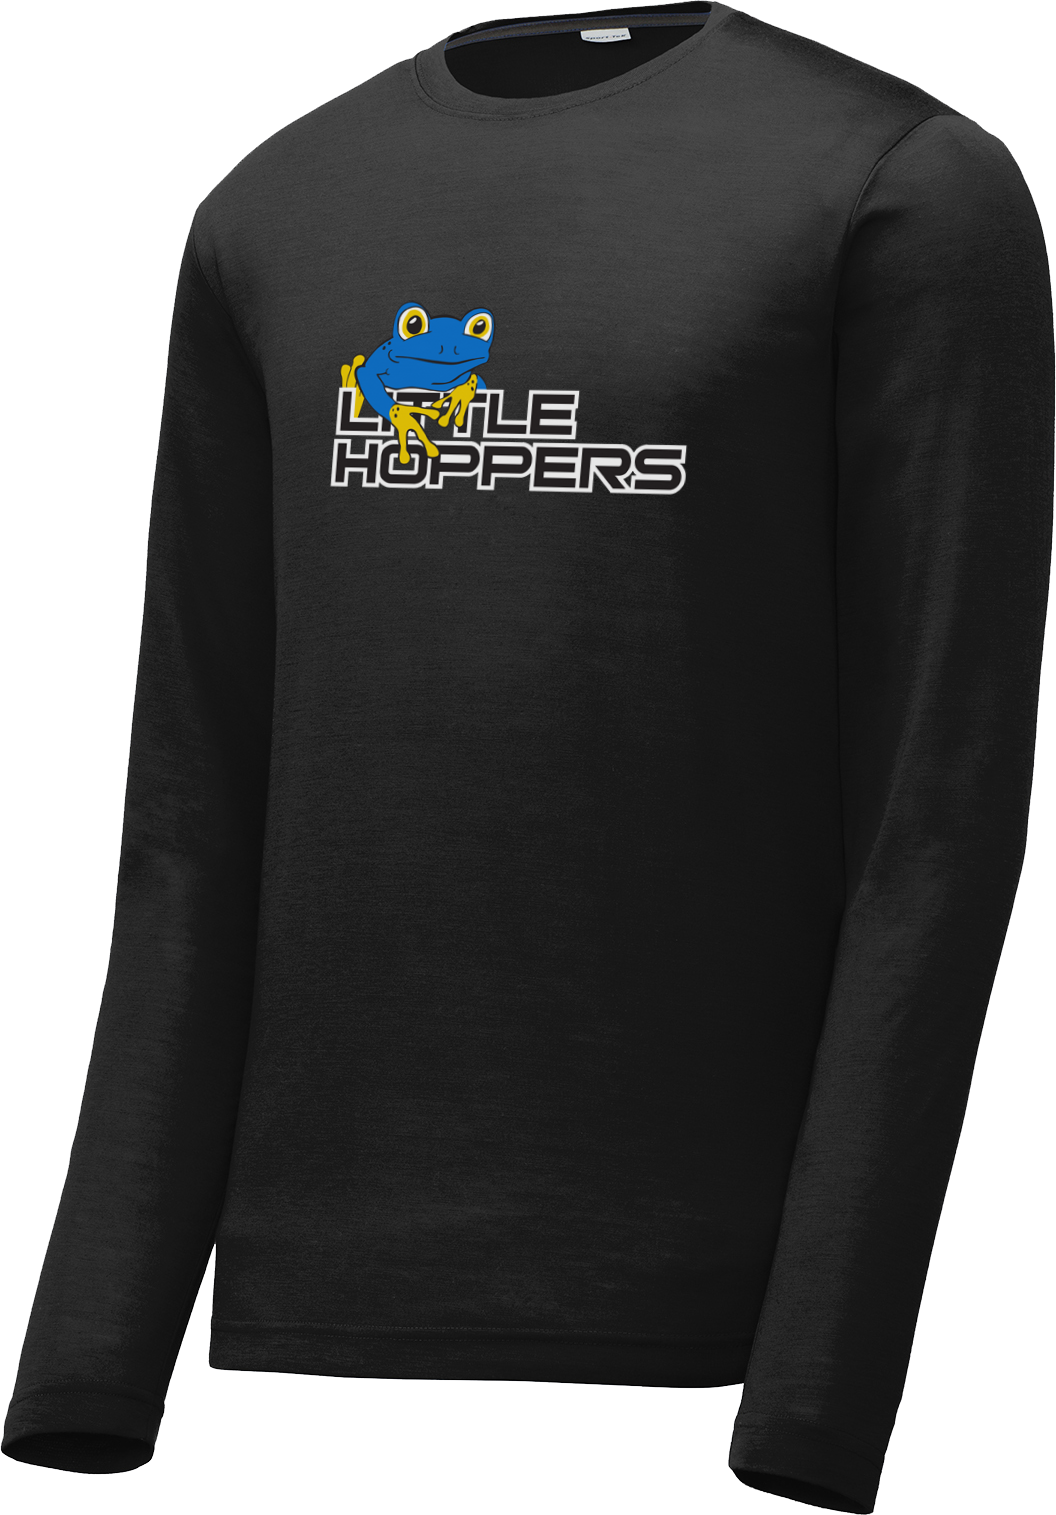 Little Hoppers Lacrosse Black Long Sleeve CottonTouch Performance Shirt